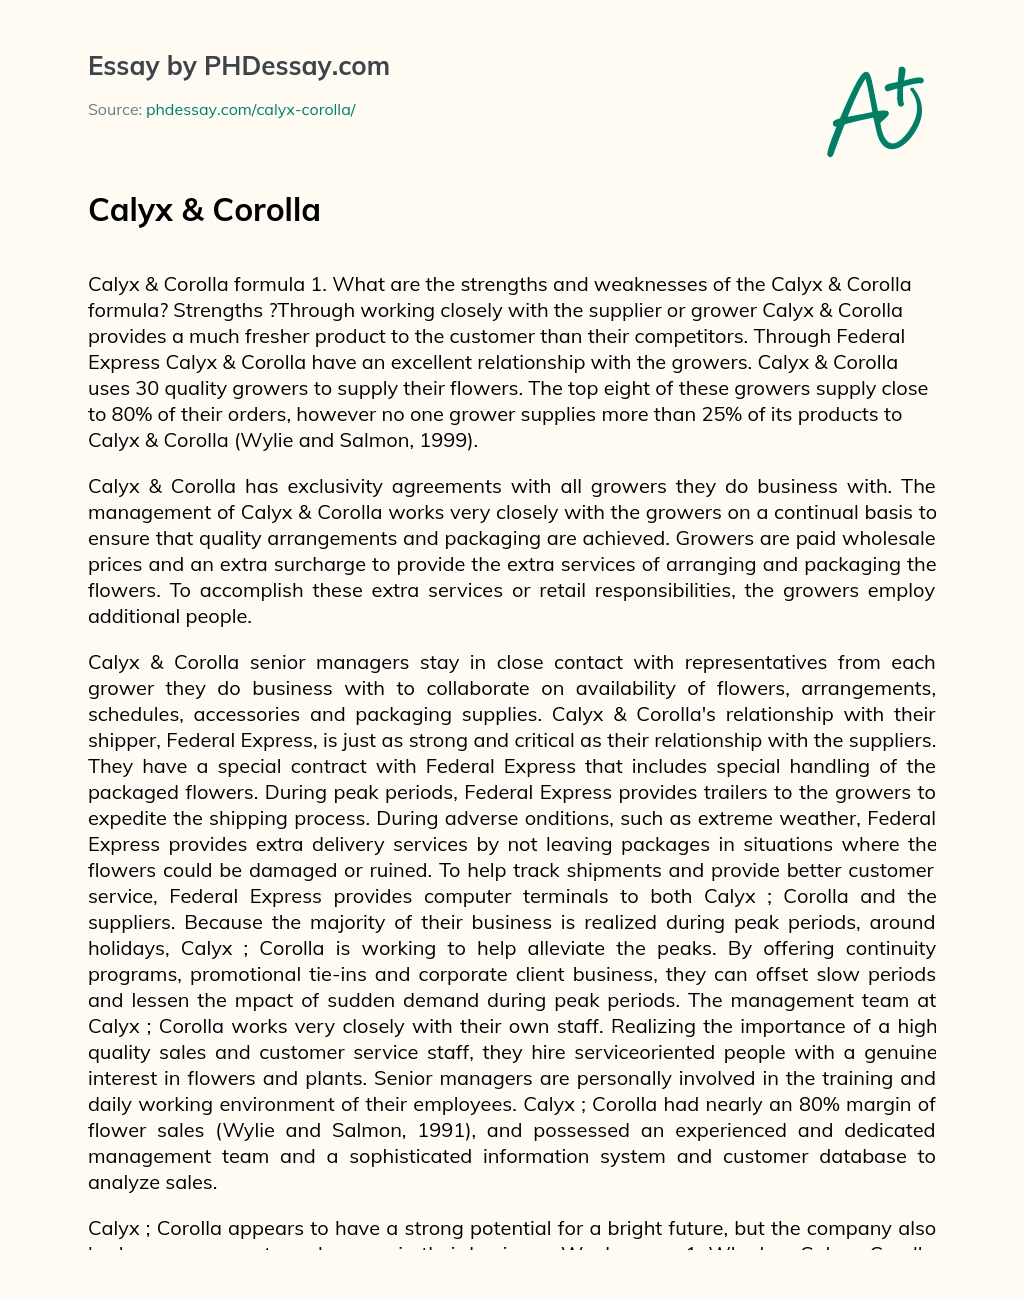 Calyx & Corolla essay